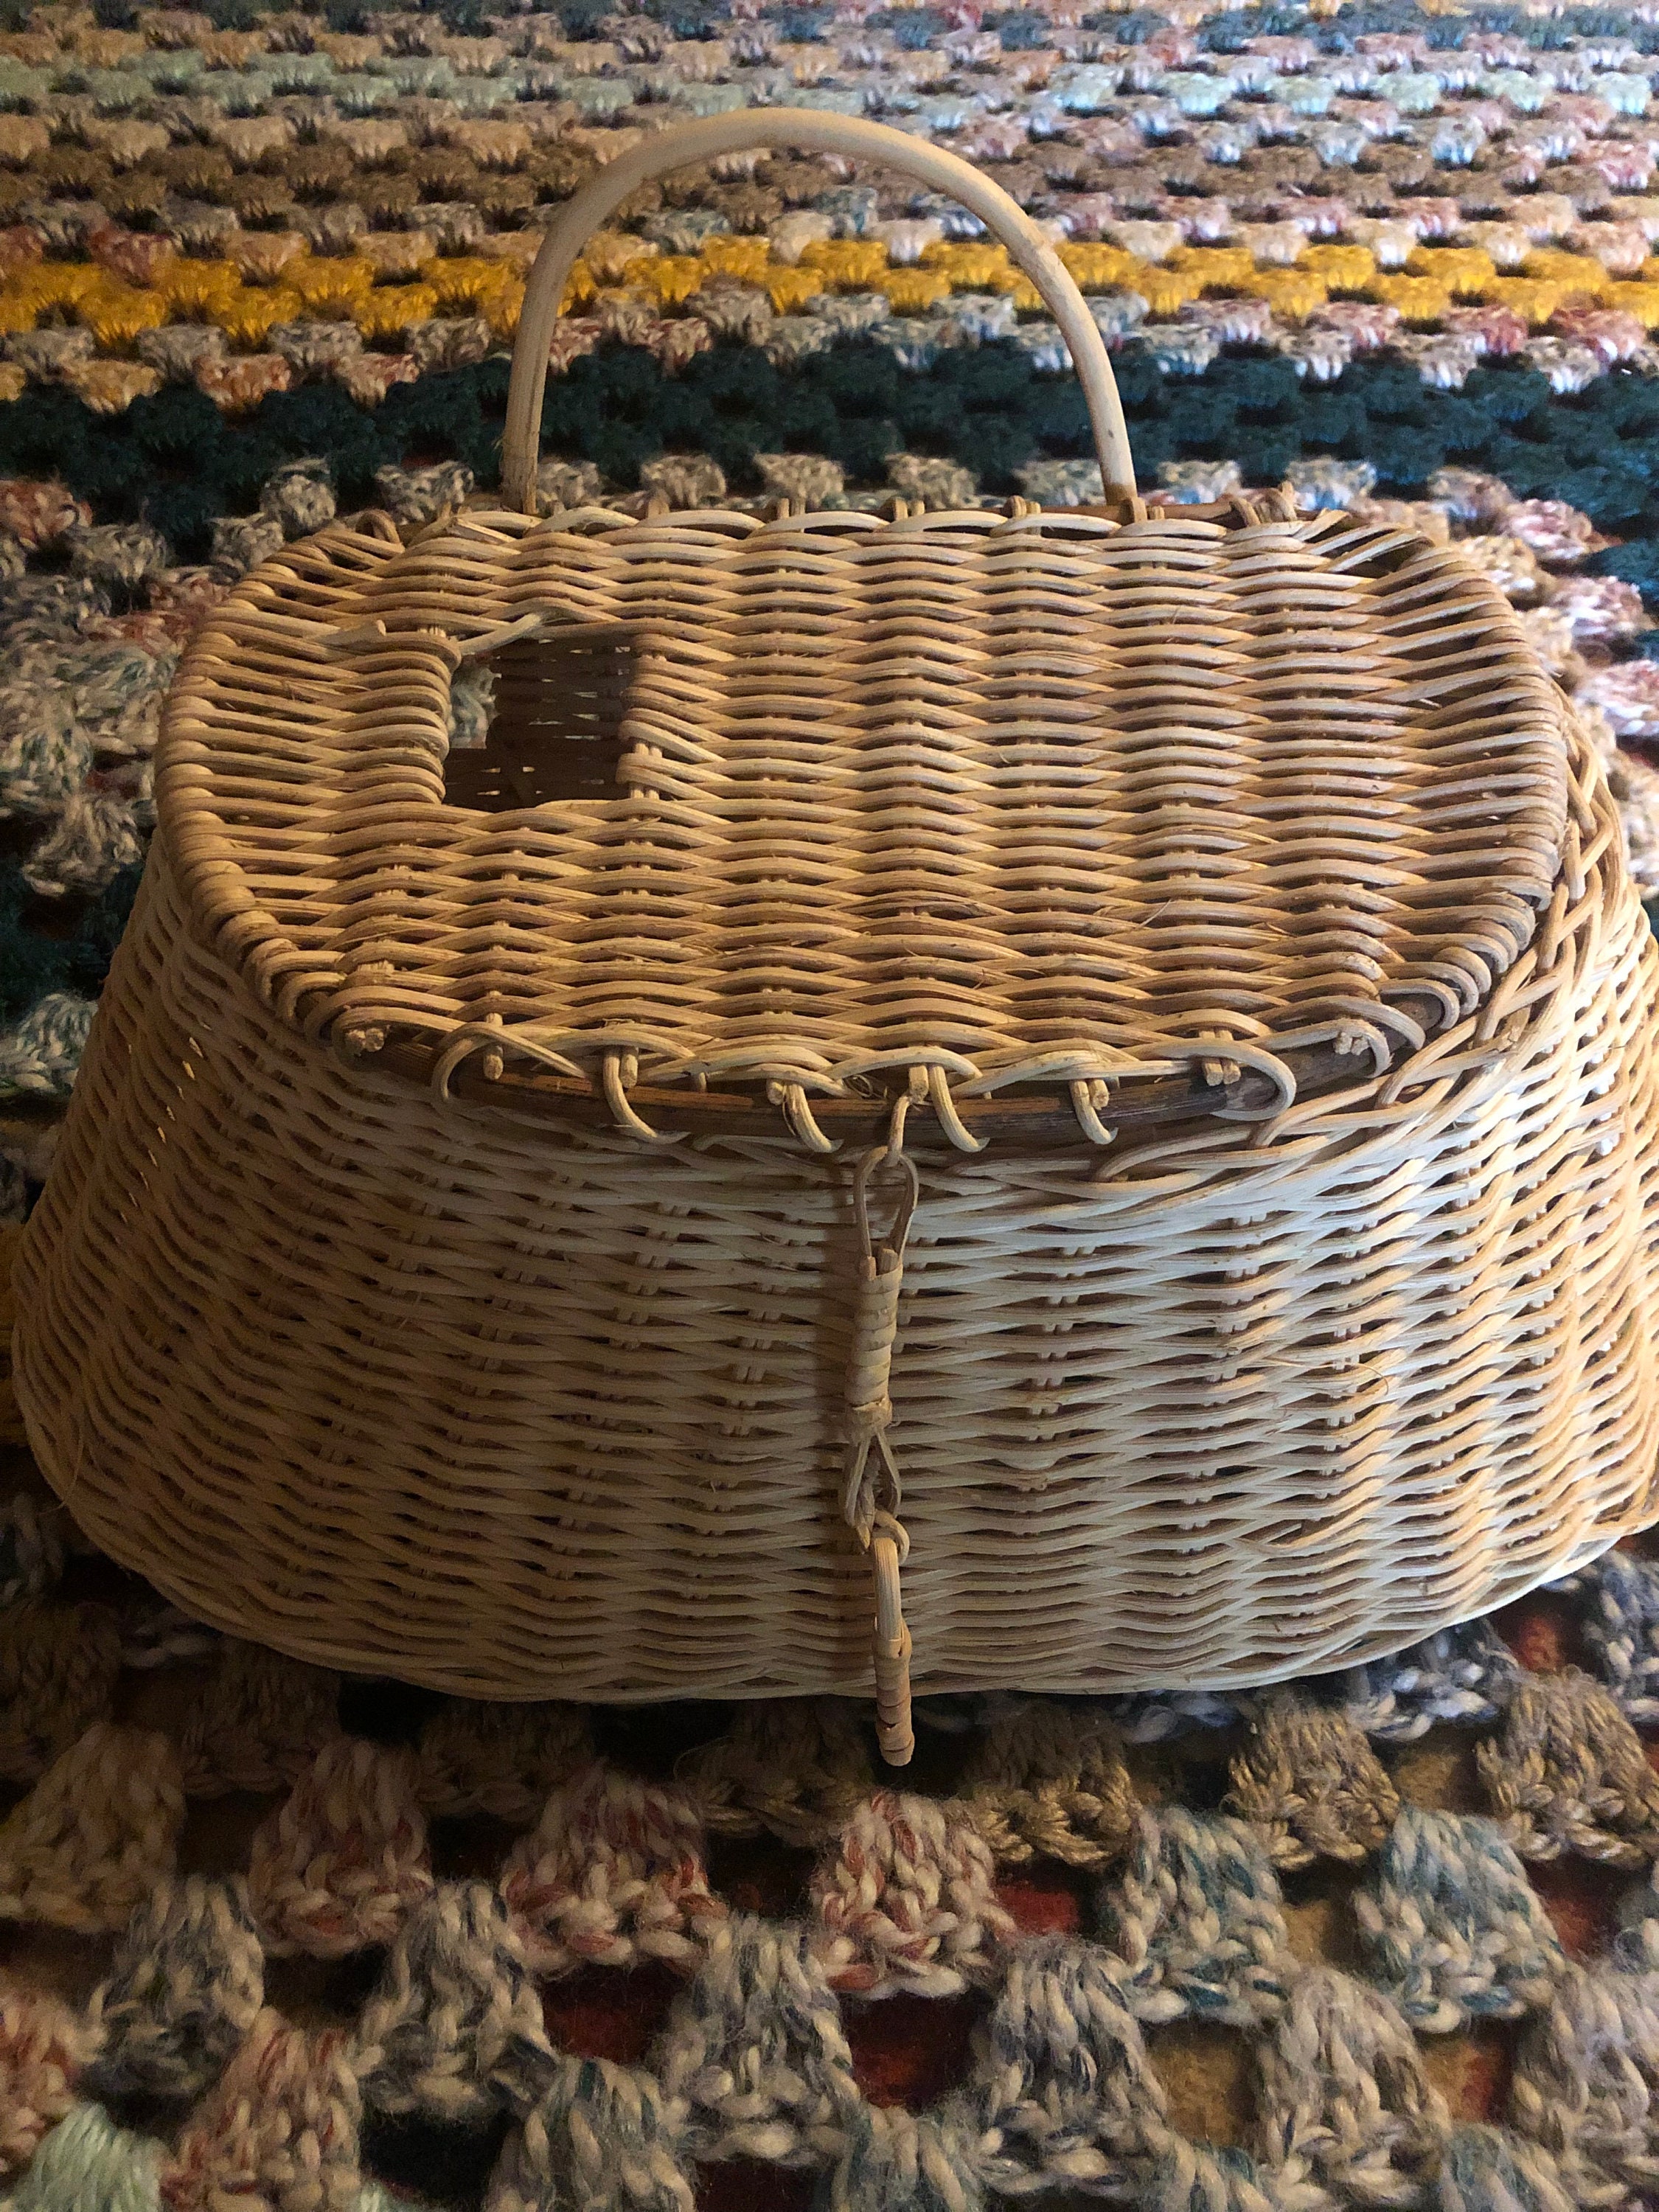 Vintage fishing creel basket wicker decoration basket